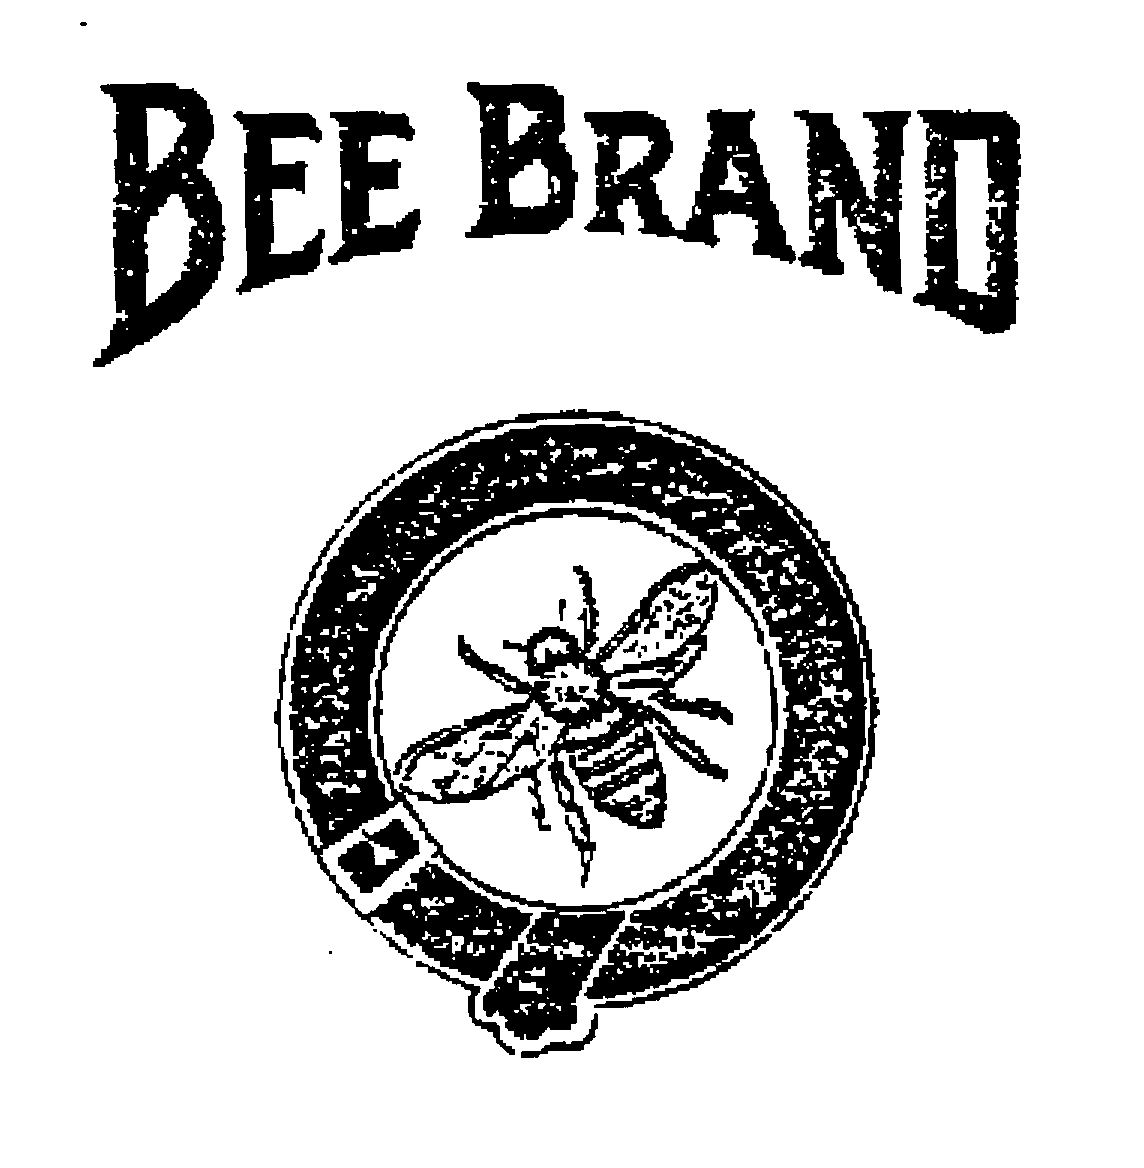  BEE BRAND